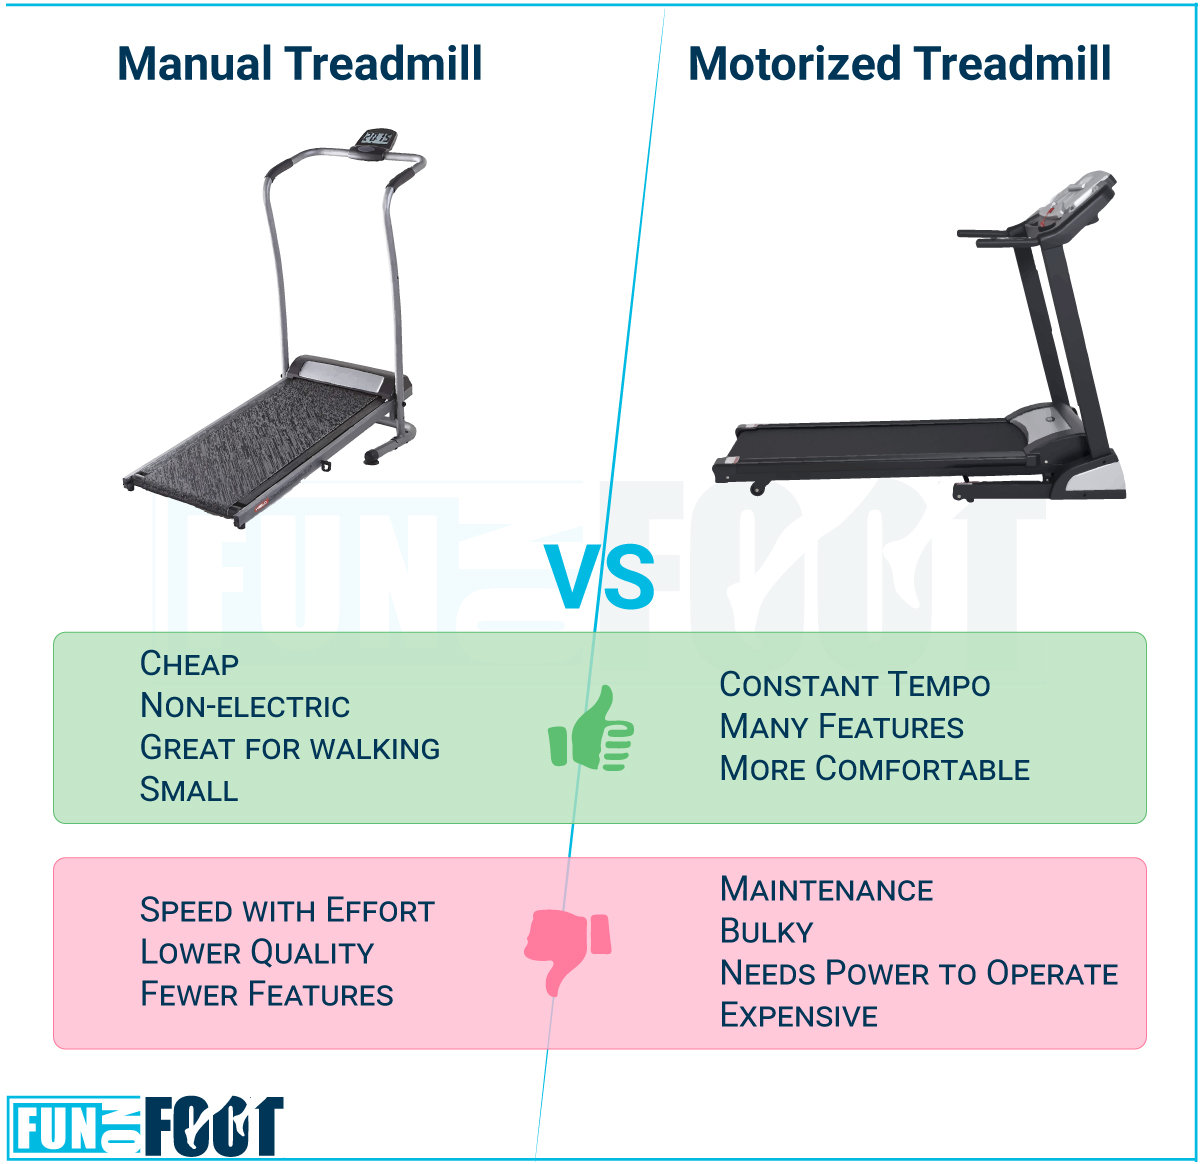 Manual vs Motorized Treadmill